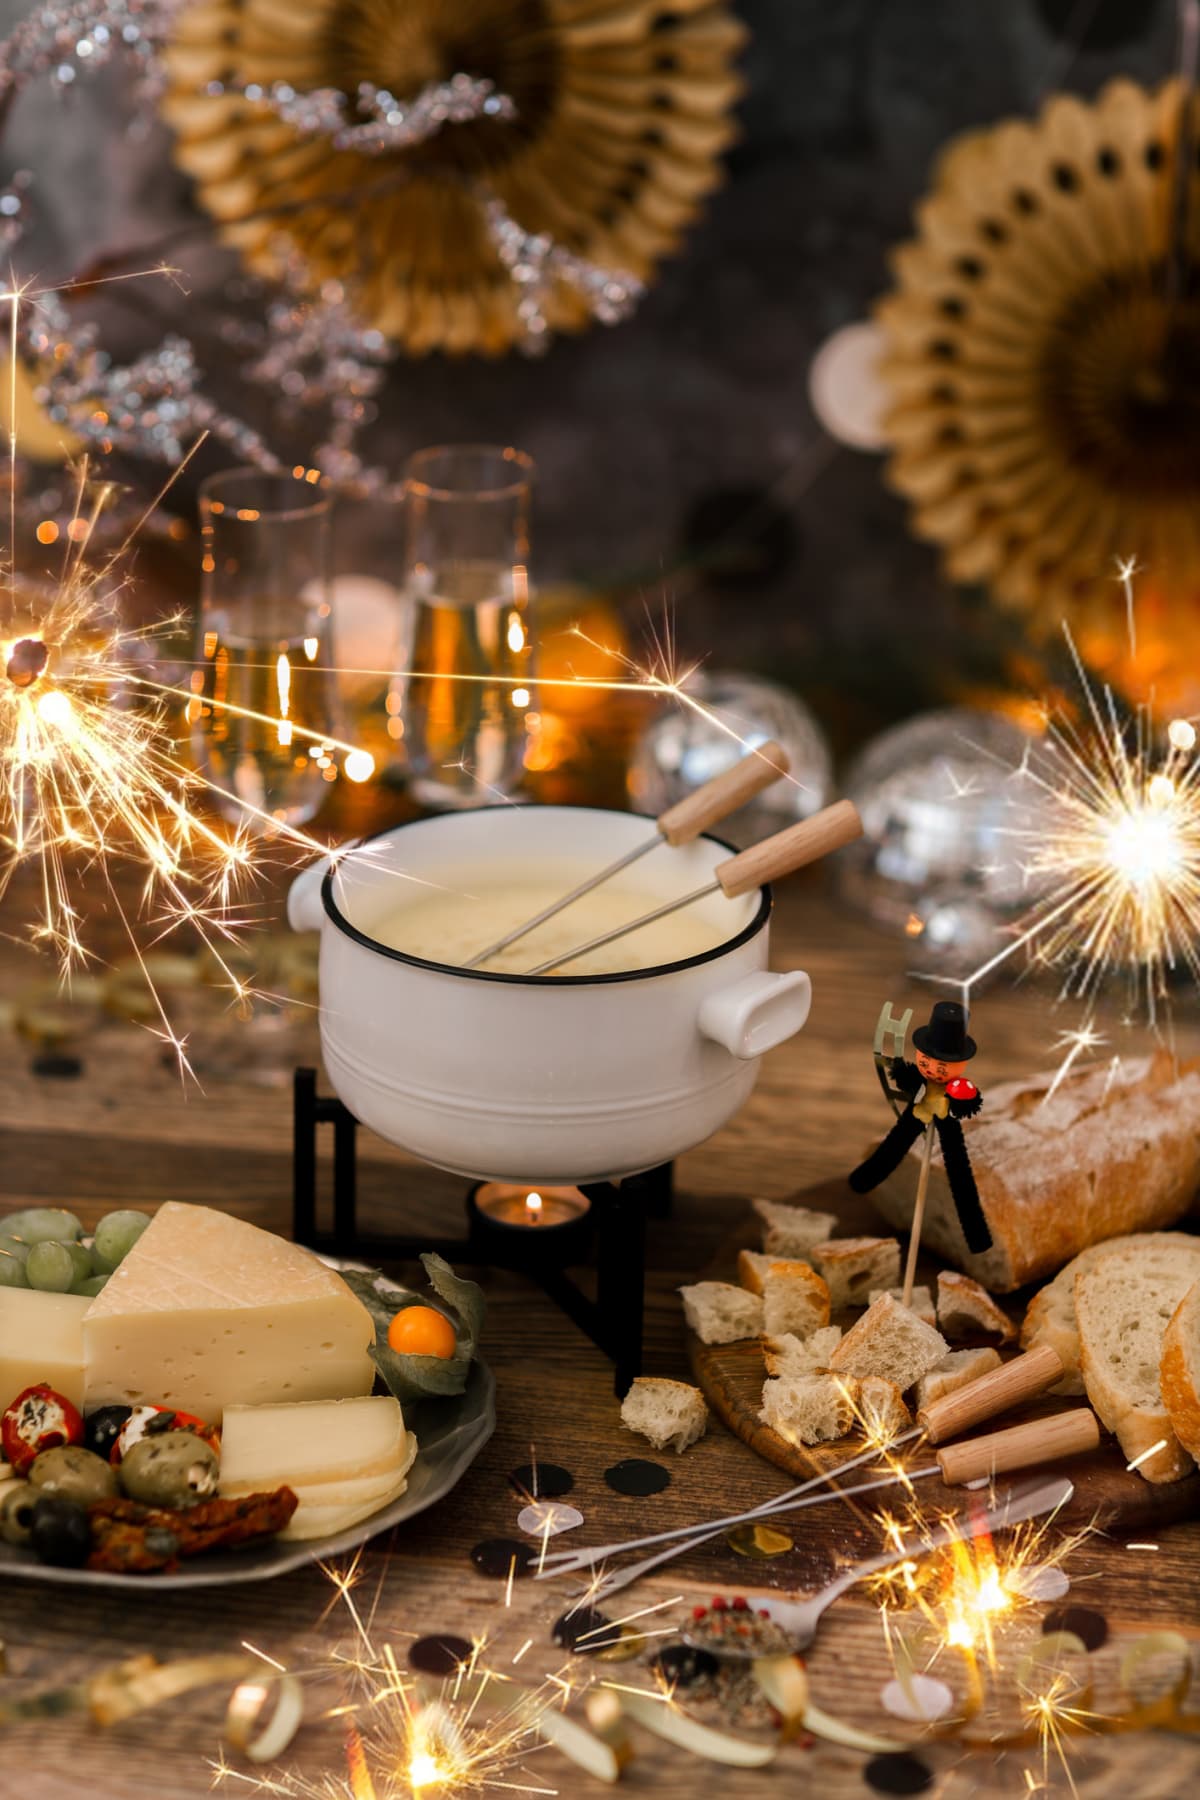 An elegant cheese fondue setting.